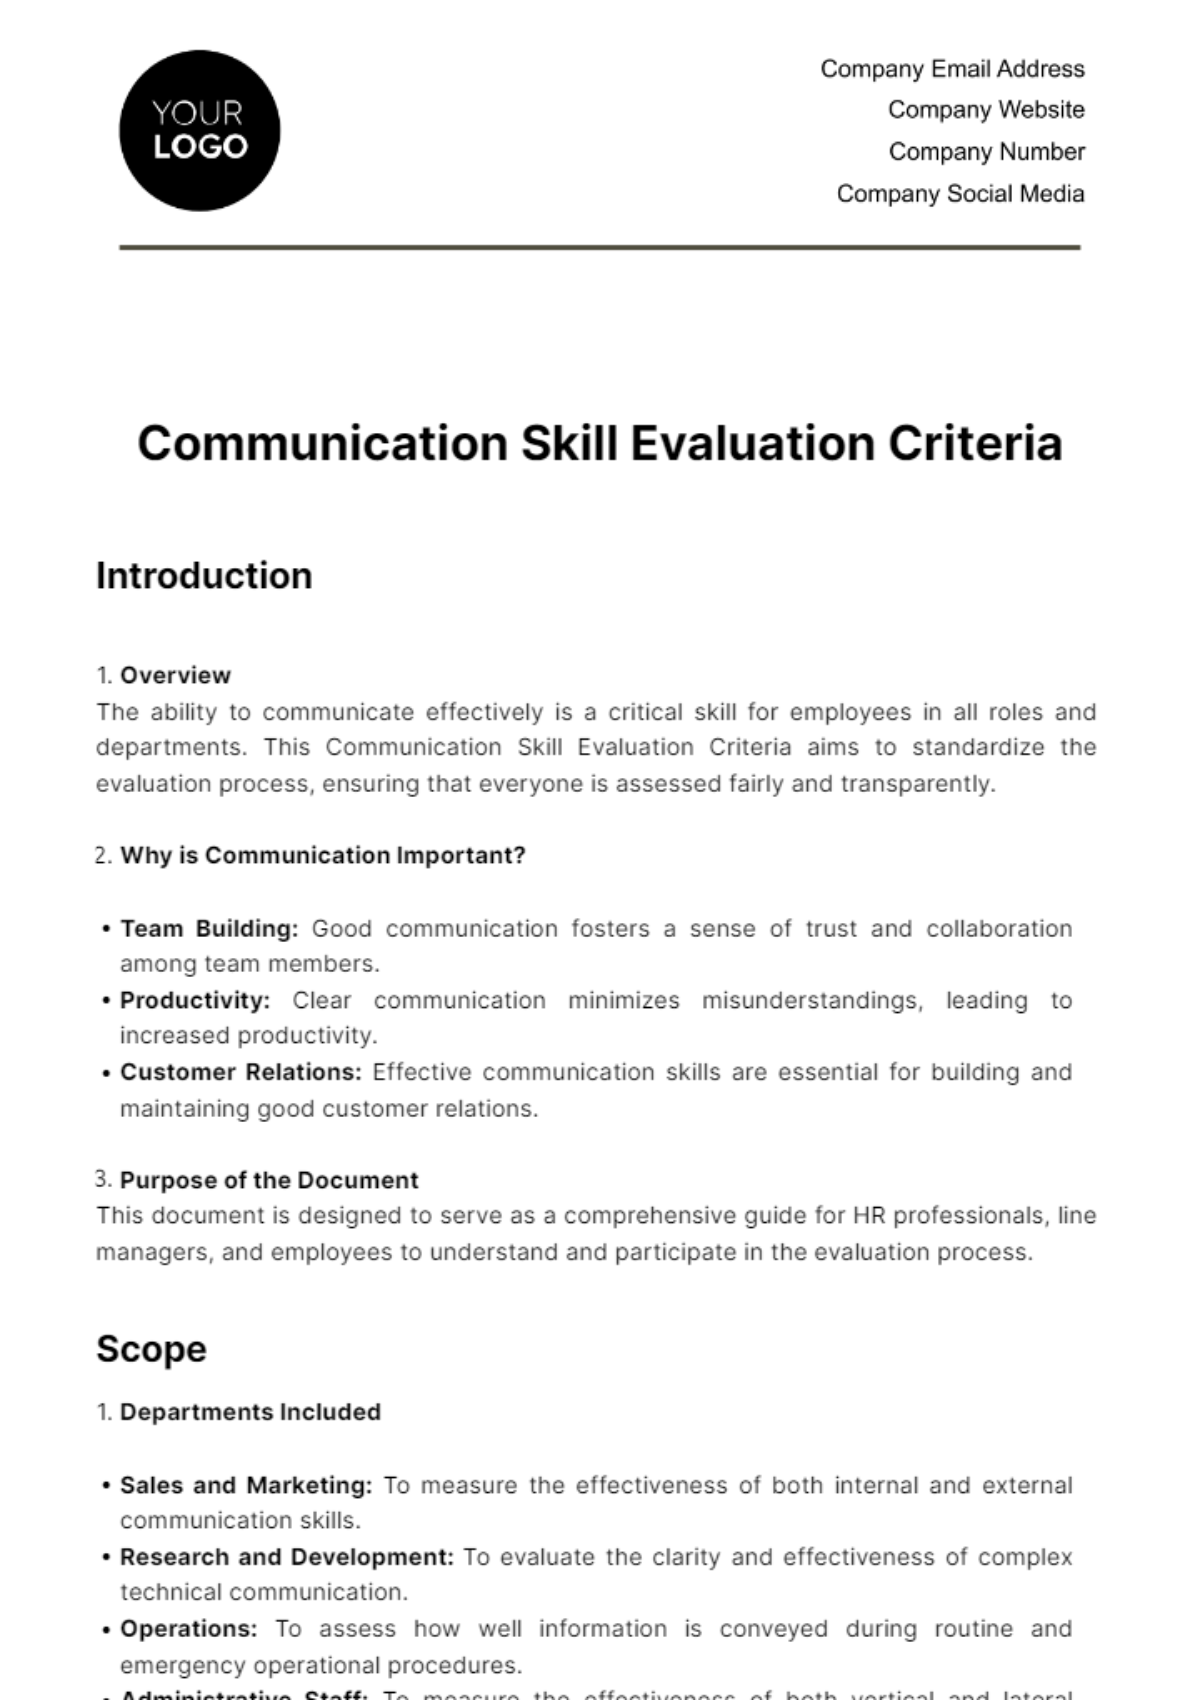 Free Communication Skill Evaluation Criteria HR Template